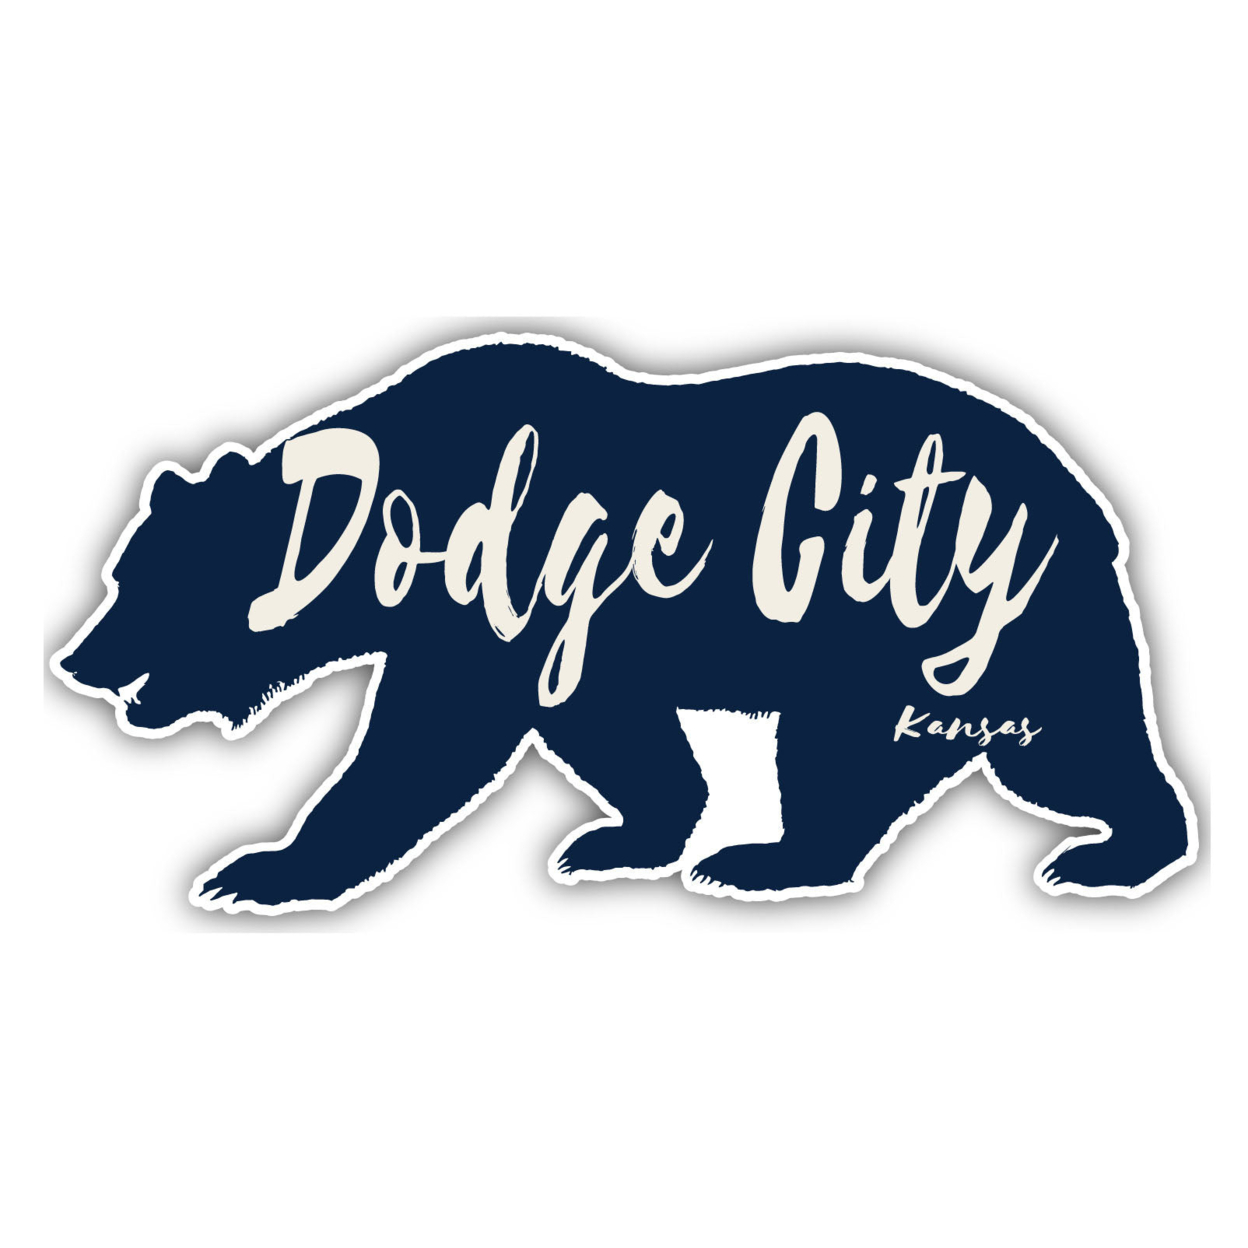 Dodge City Kansas Souvenir Decorative Stickers (Choose Theme And Size) - 4-Pack, 6-Inch, Tent